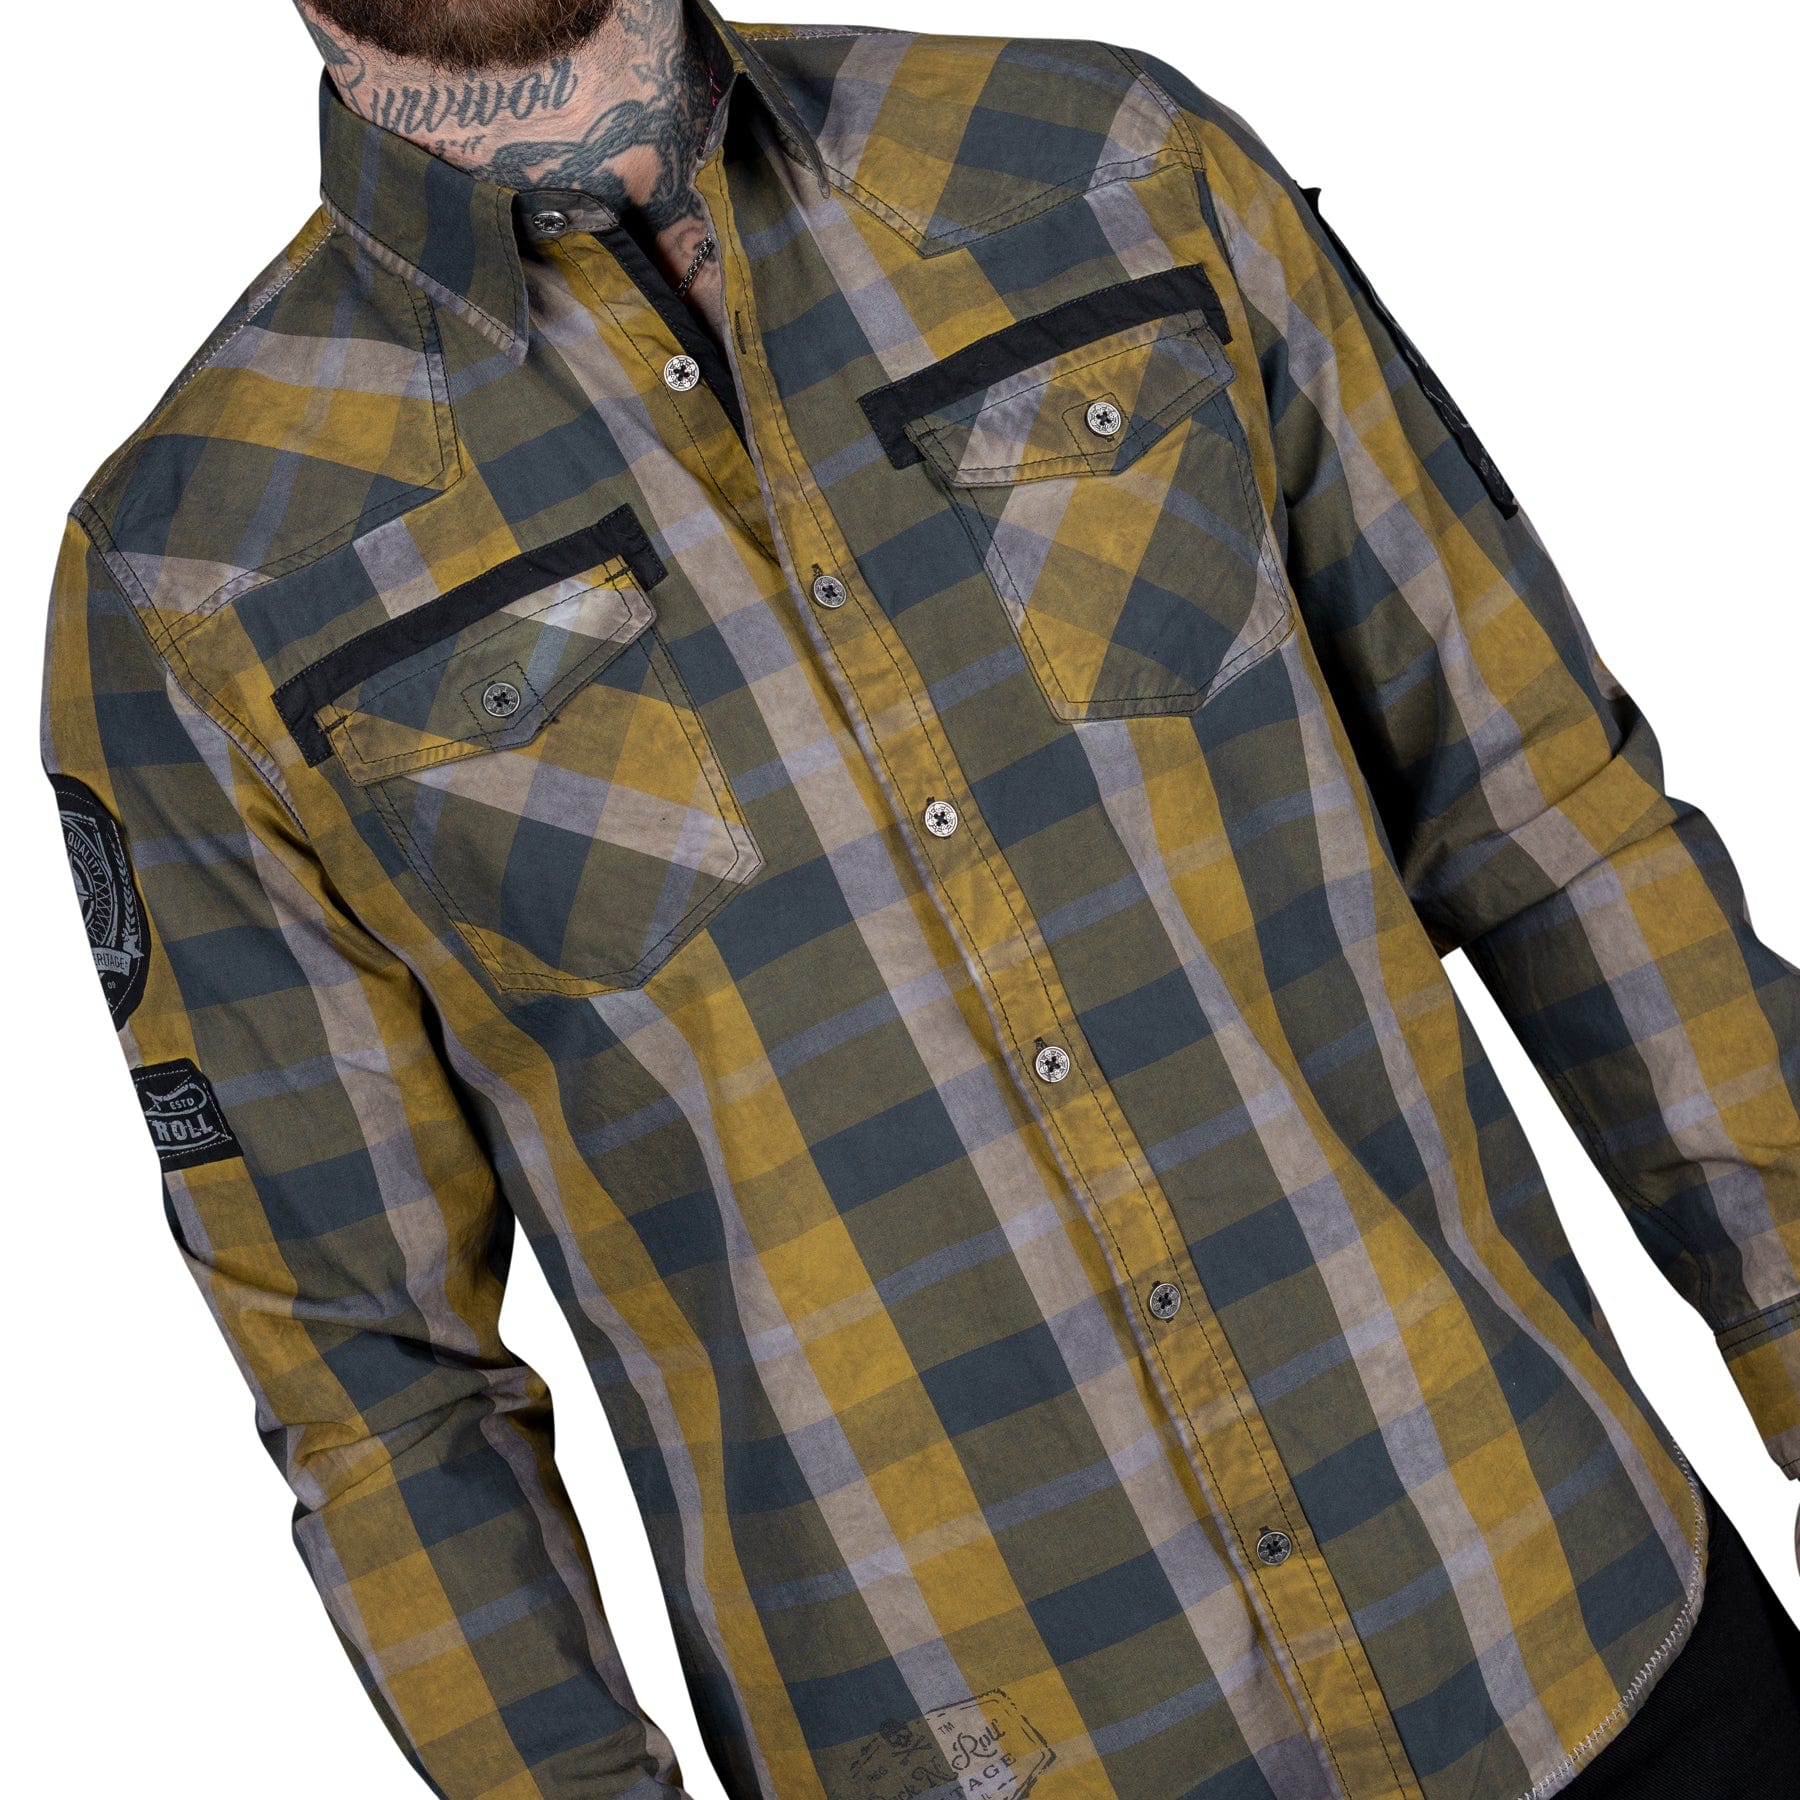 Wornstar Clothing Mens Long Sleeve Shirt. Amarillo Button Down Plaid Shirt.